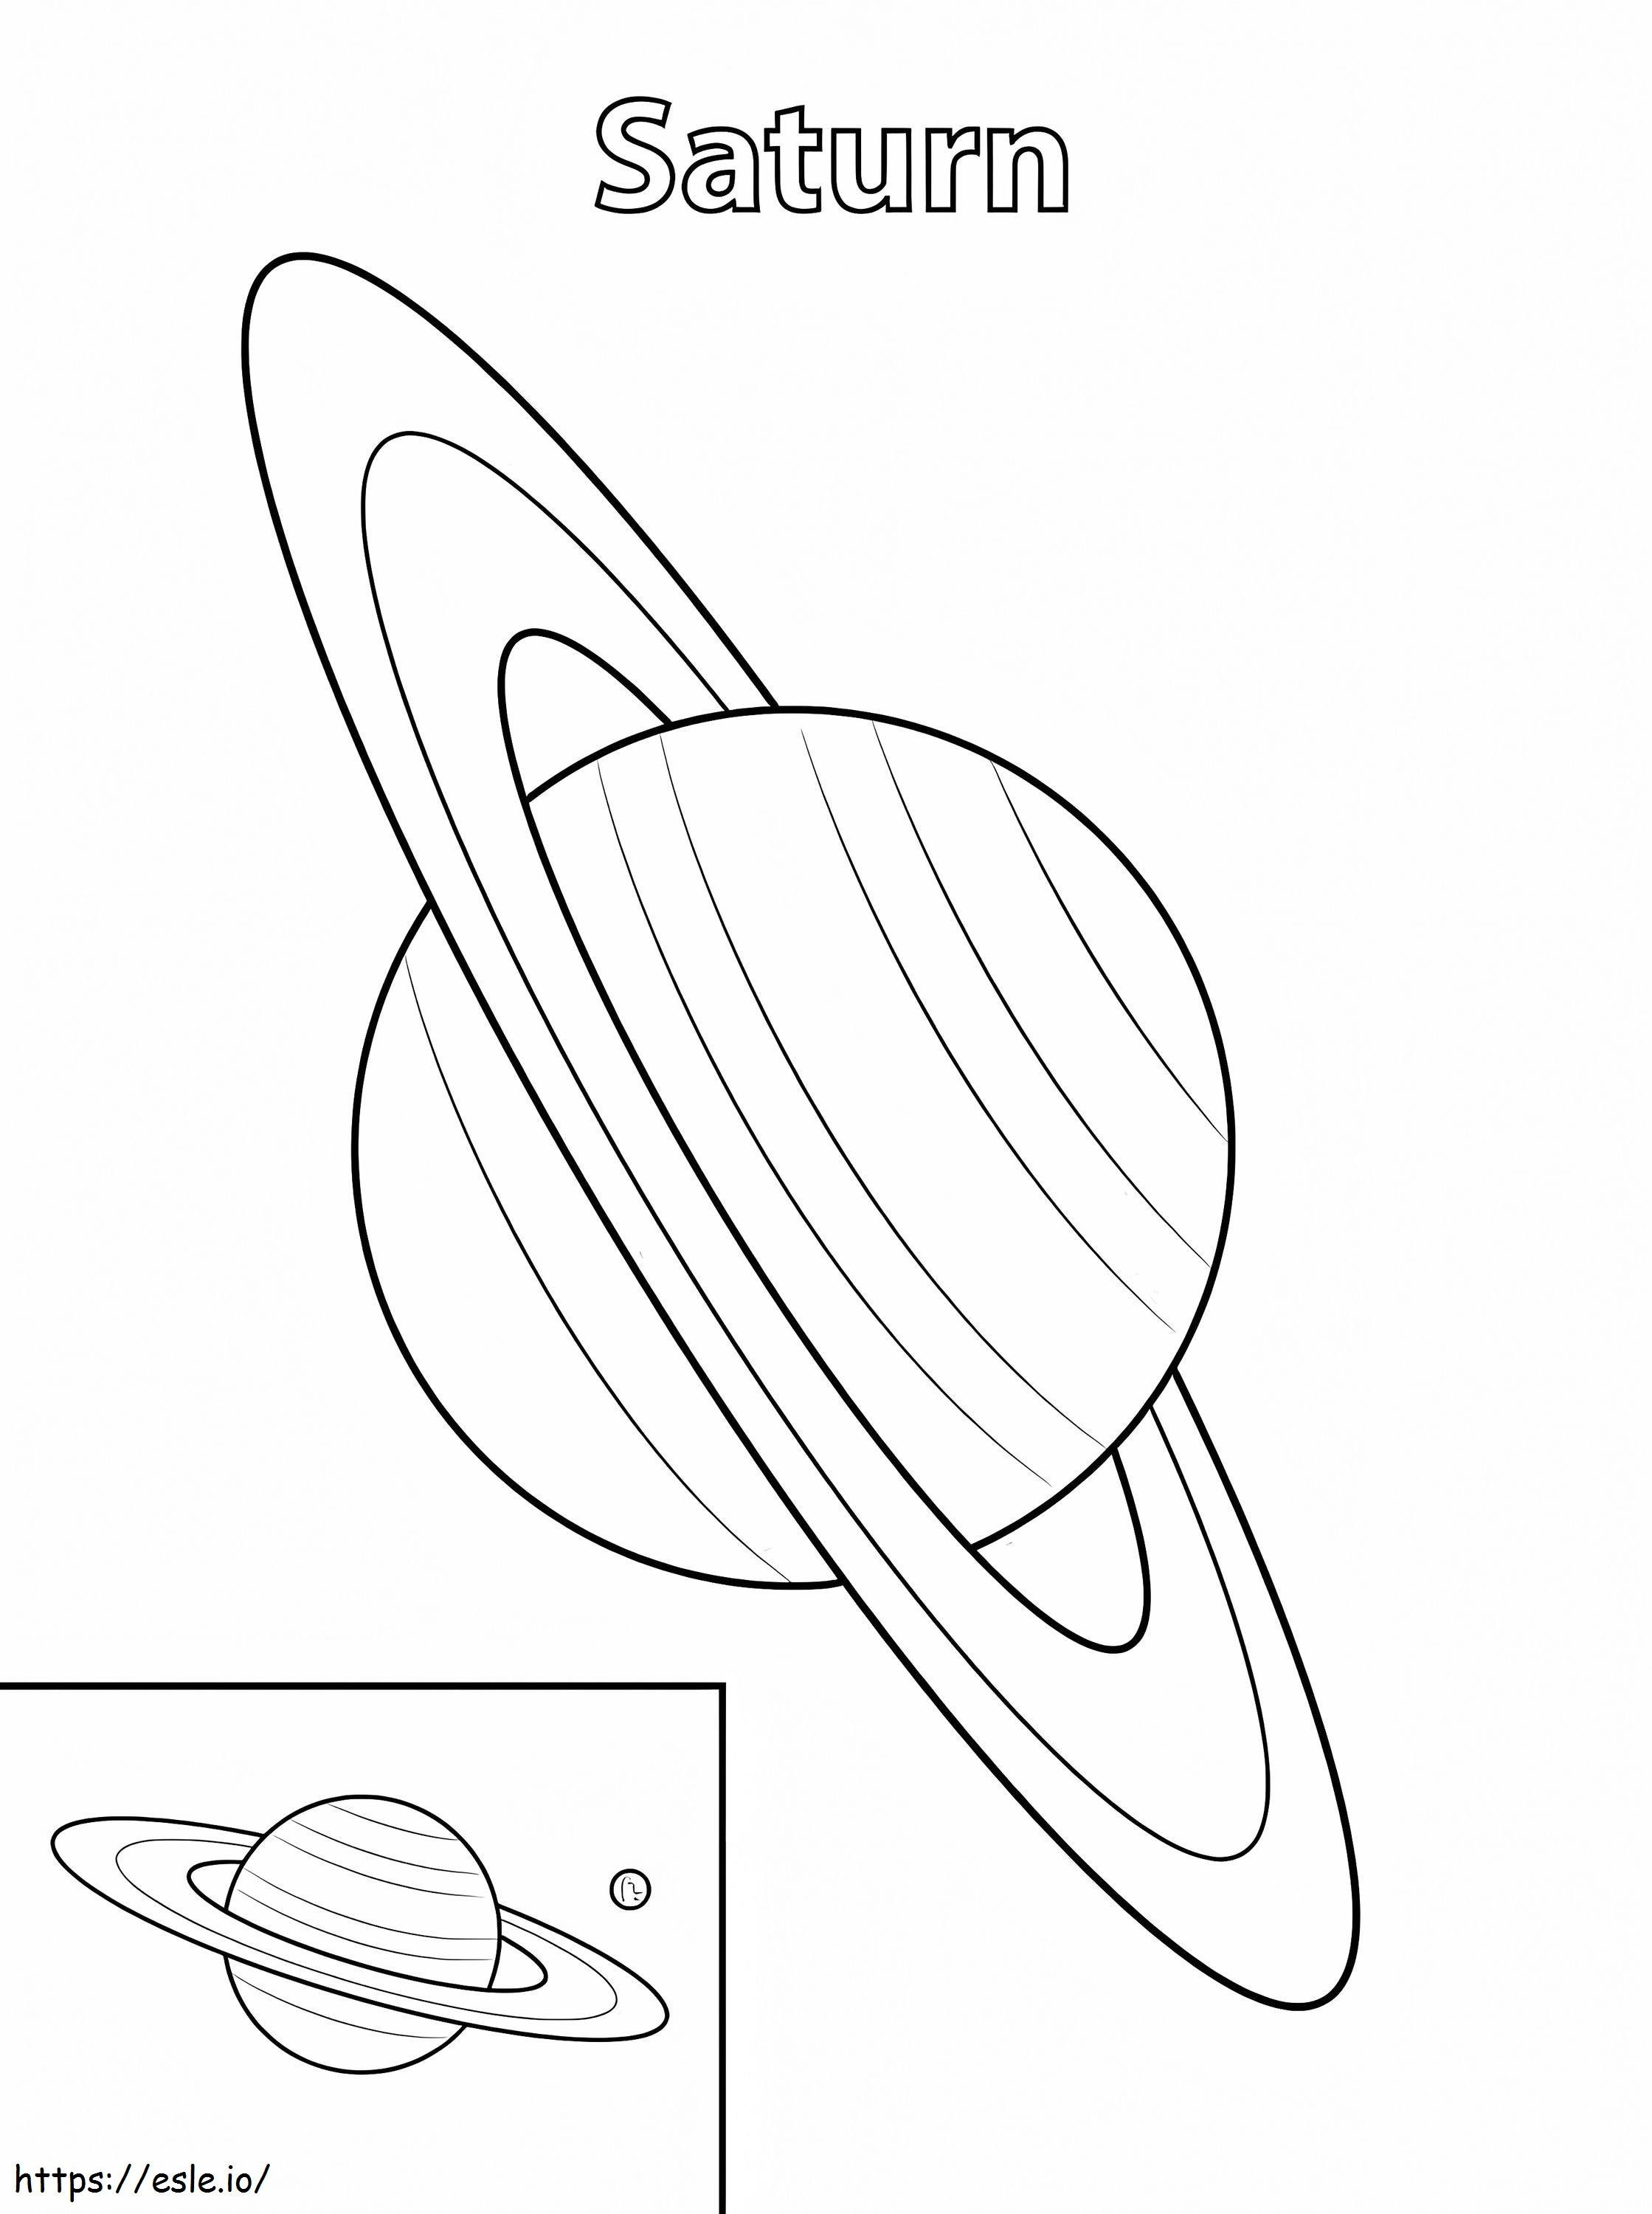 Planeta Saturn kolorowanka